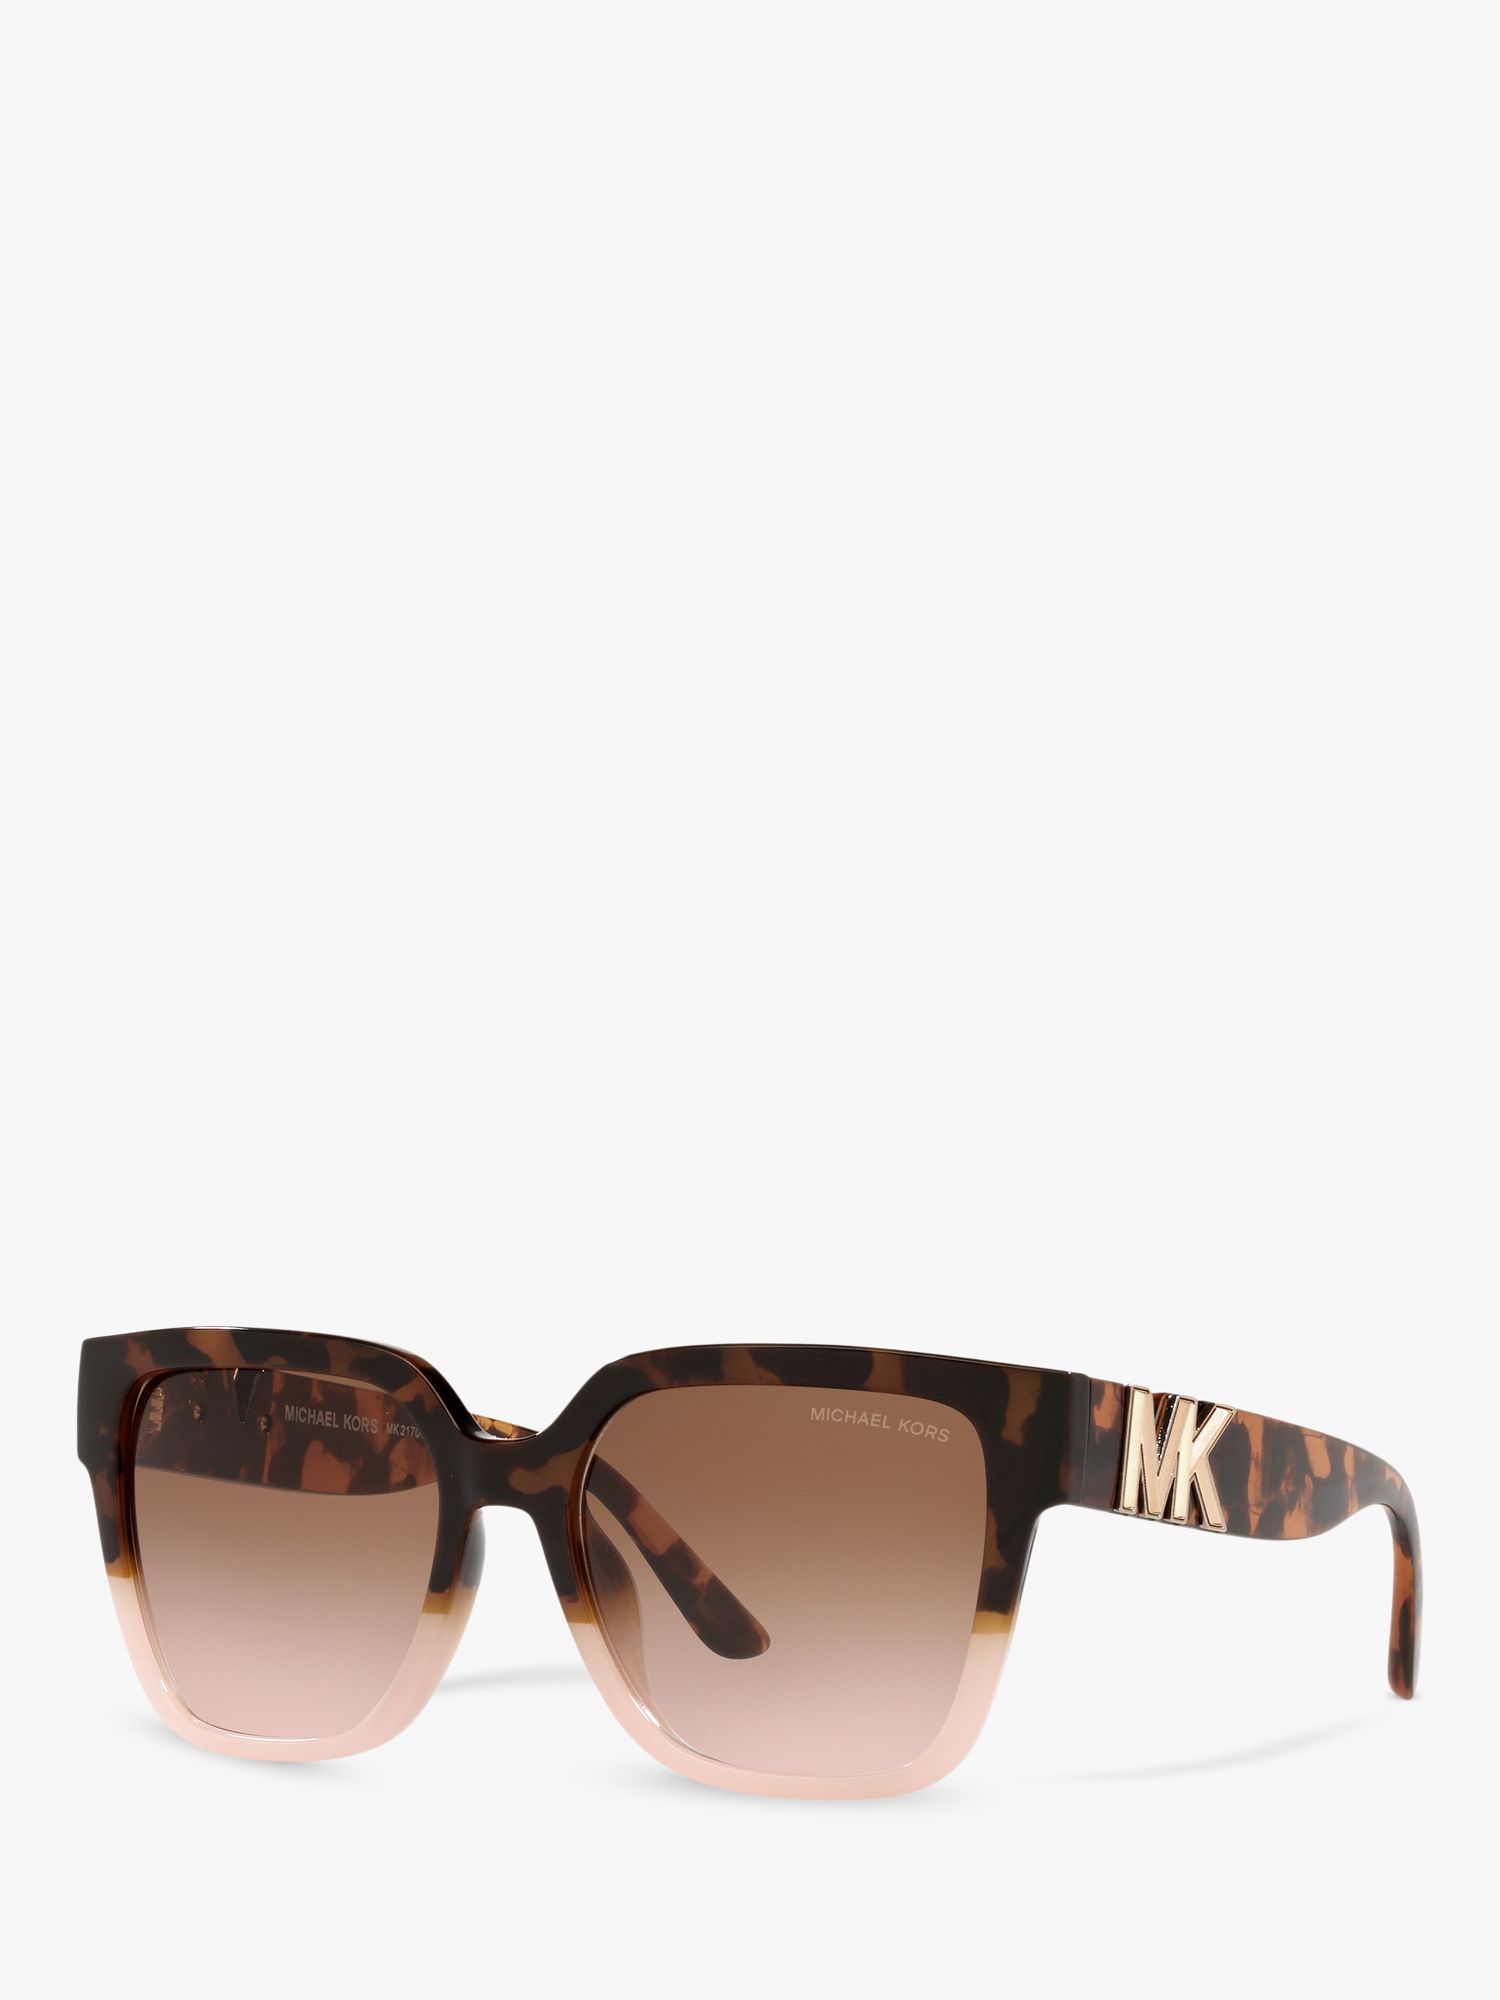 Michael Kors Mk2170u Women S Karlie Square Sunglasses Dark Tortoise Pink At John Lewis And Partners